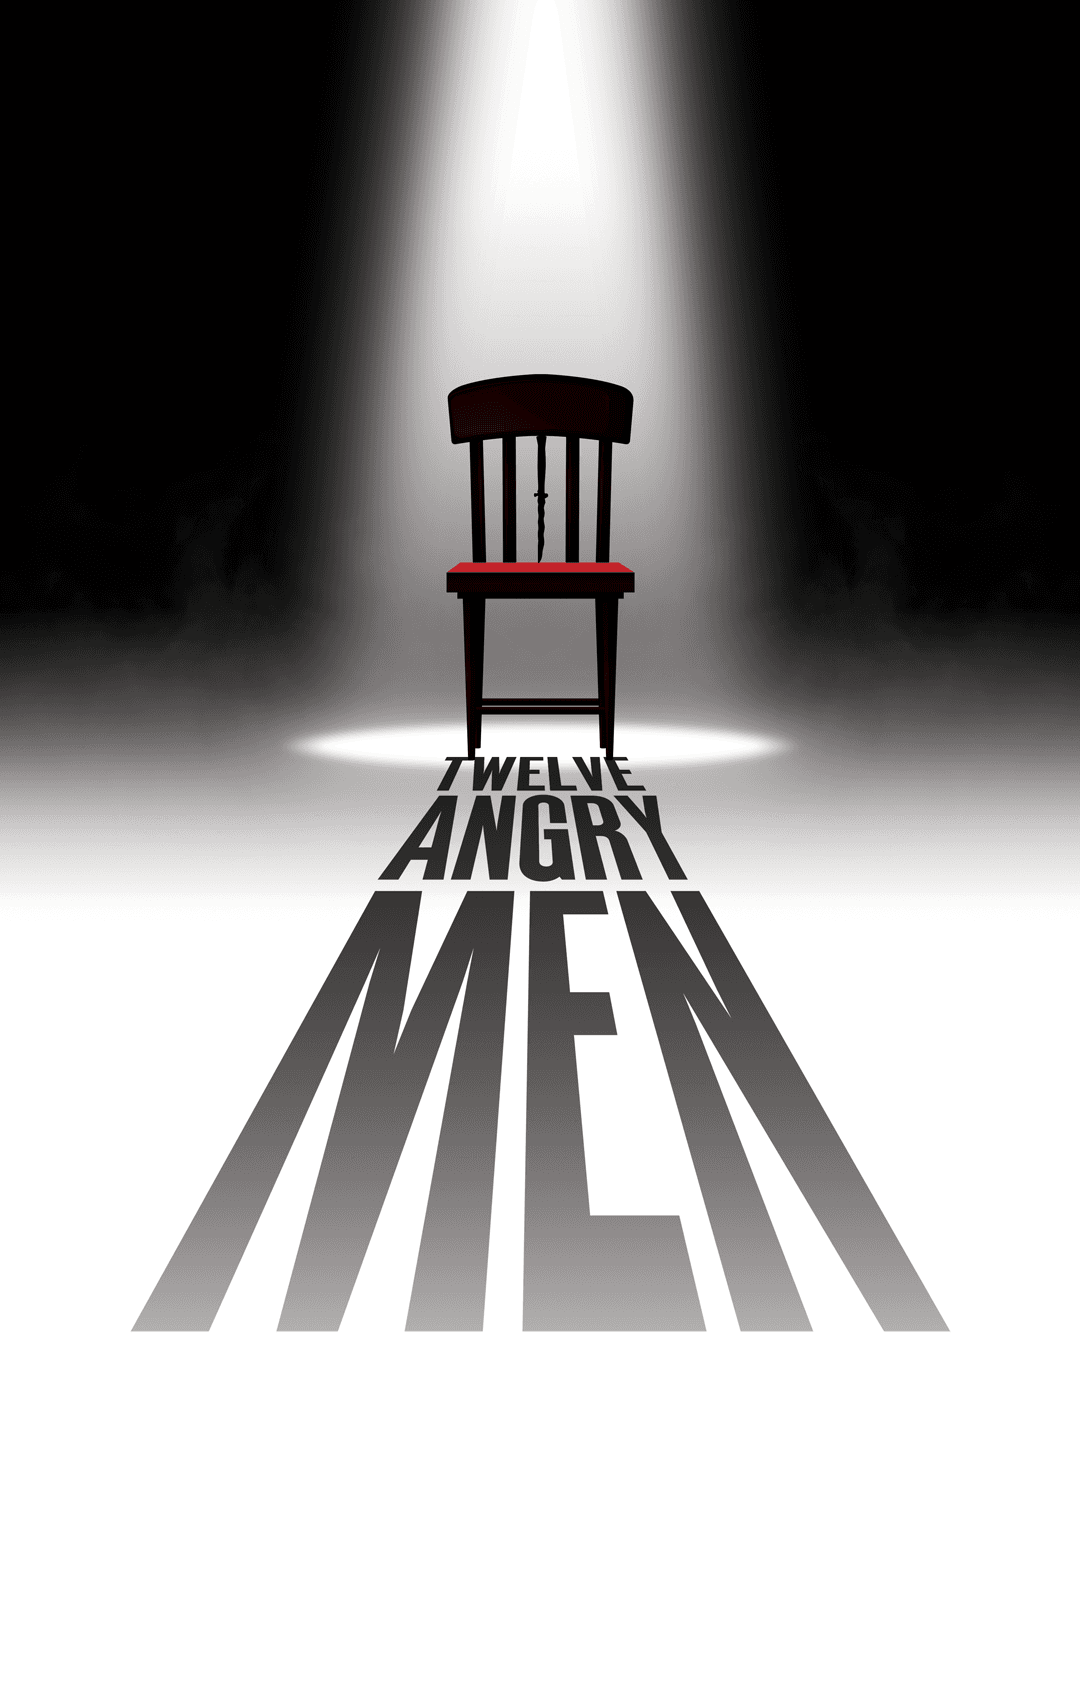 Twelve Angry Men
Wed Dec 7, 7:30 PM - Sat Dec 24, 9:30 PM
in 49 days